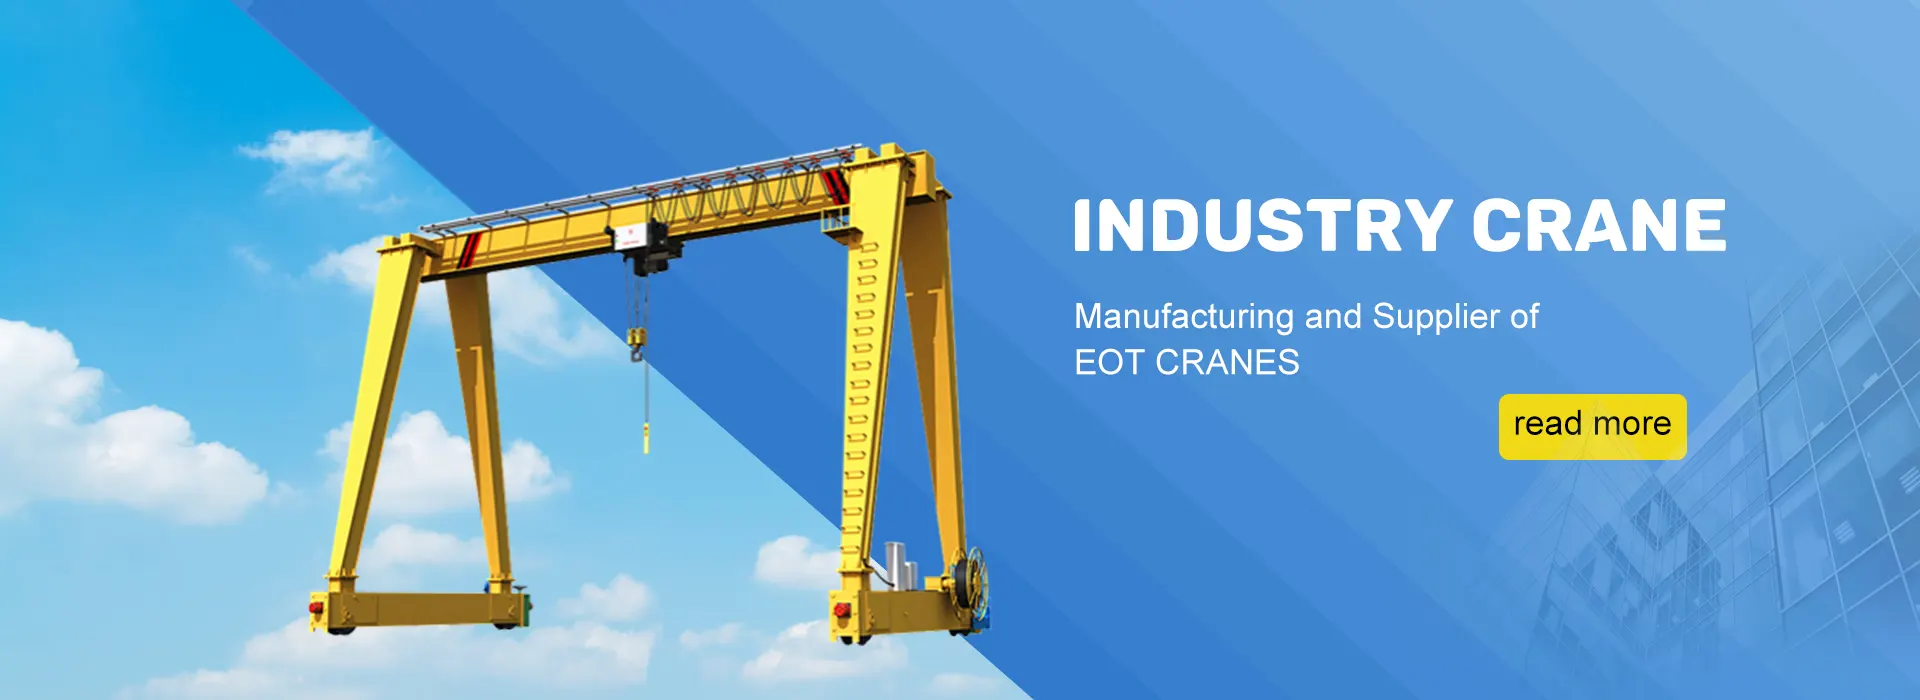 Industry Crane Manufacturers